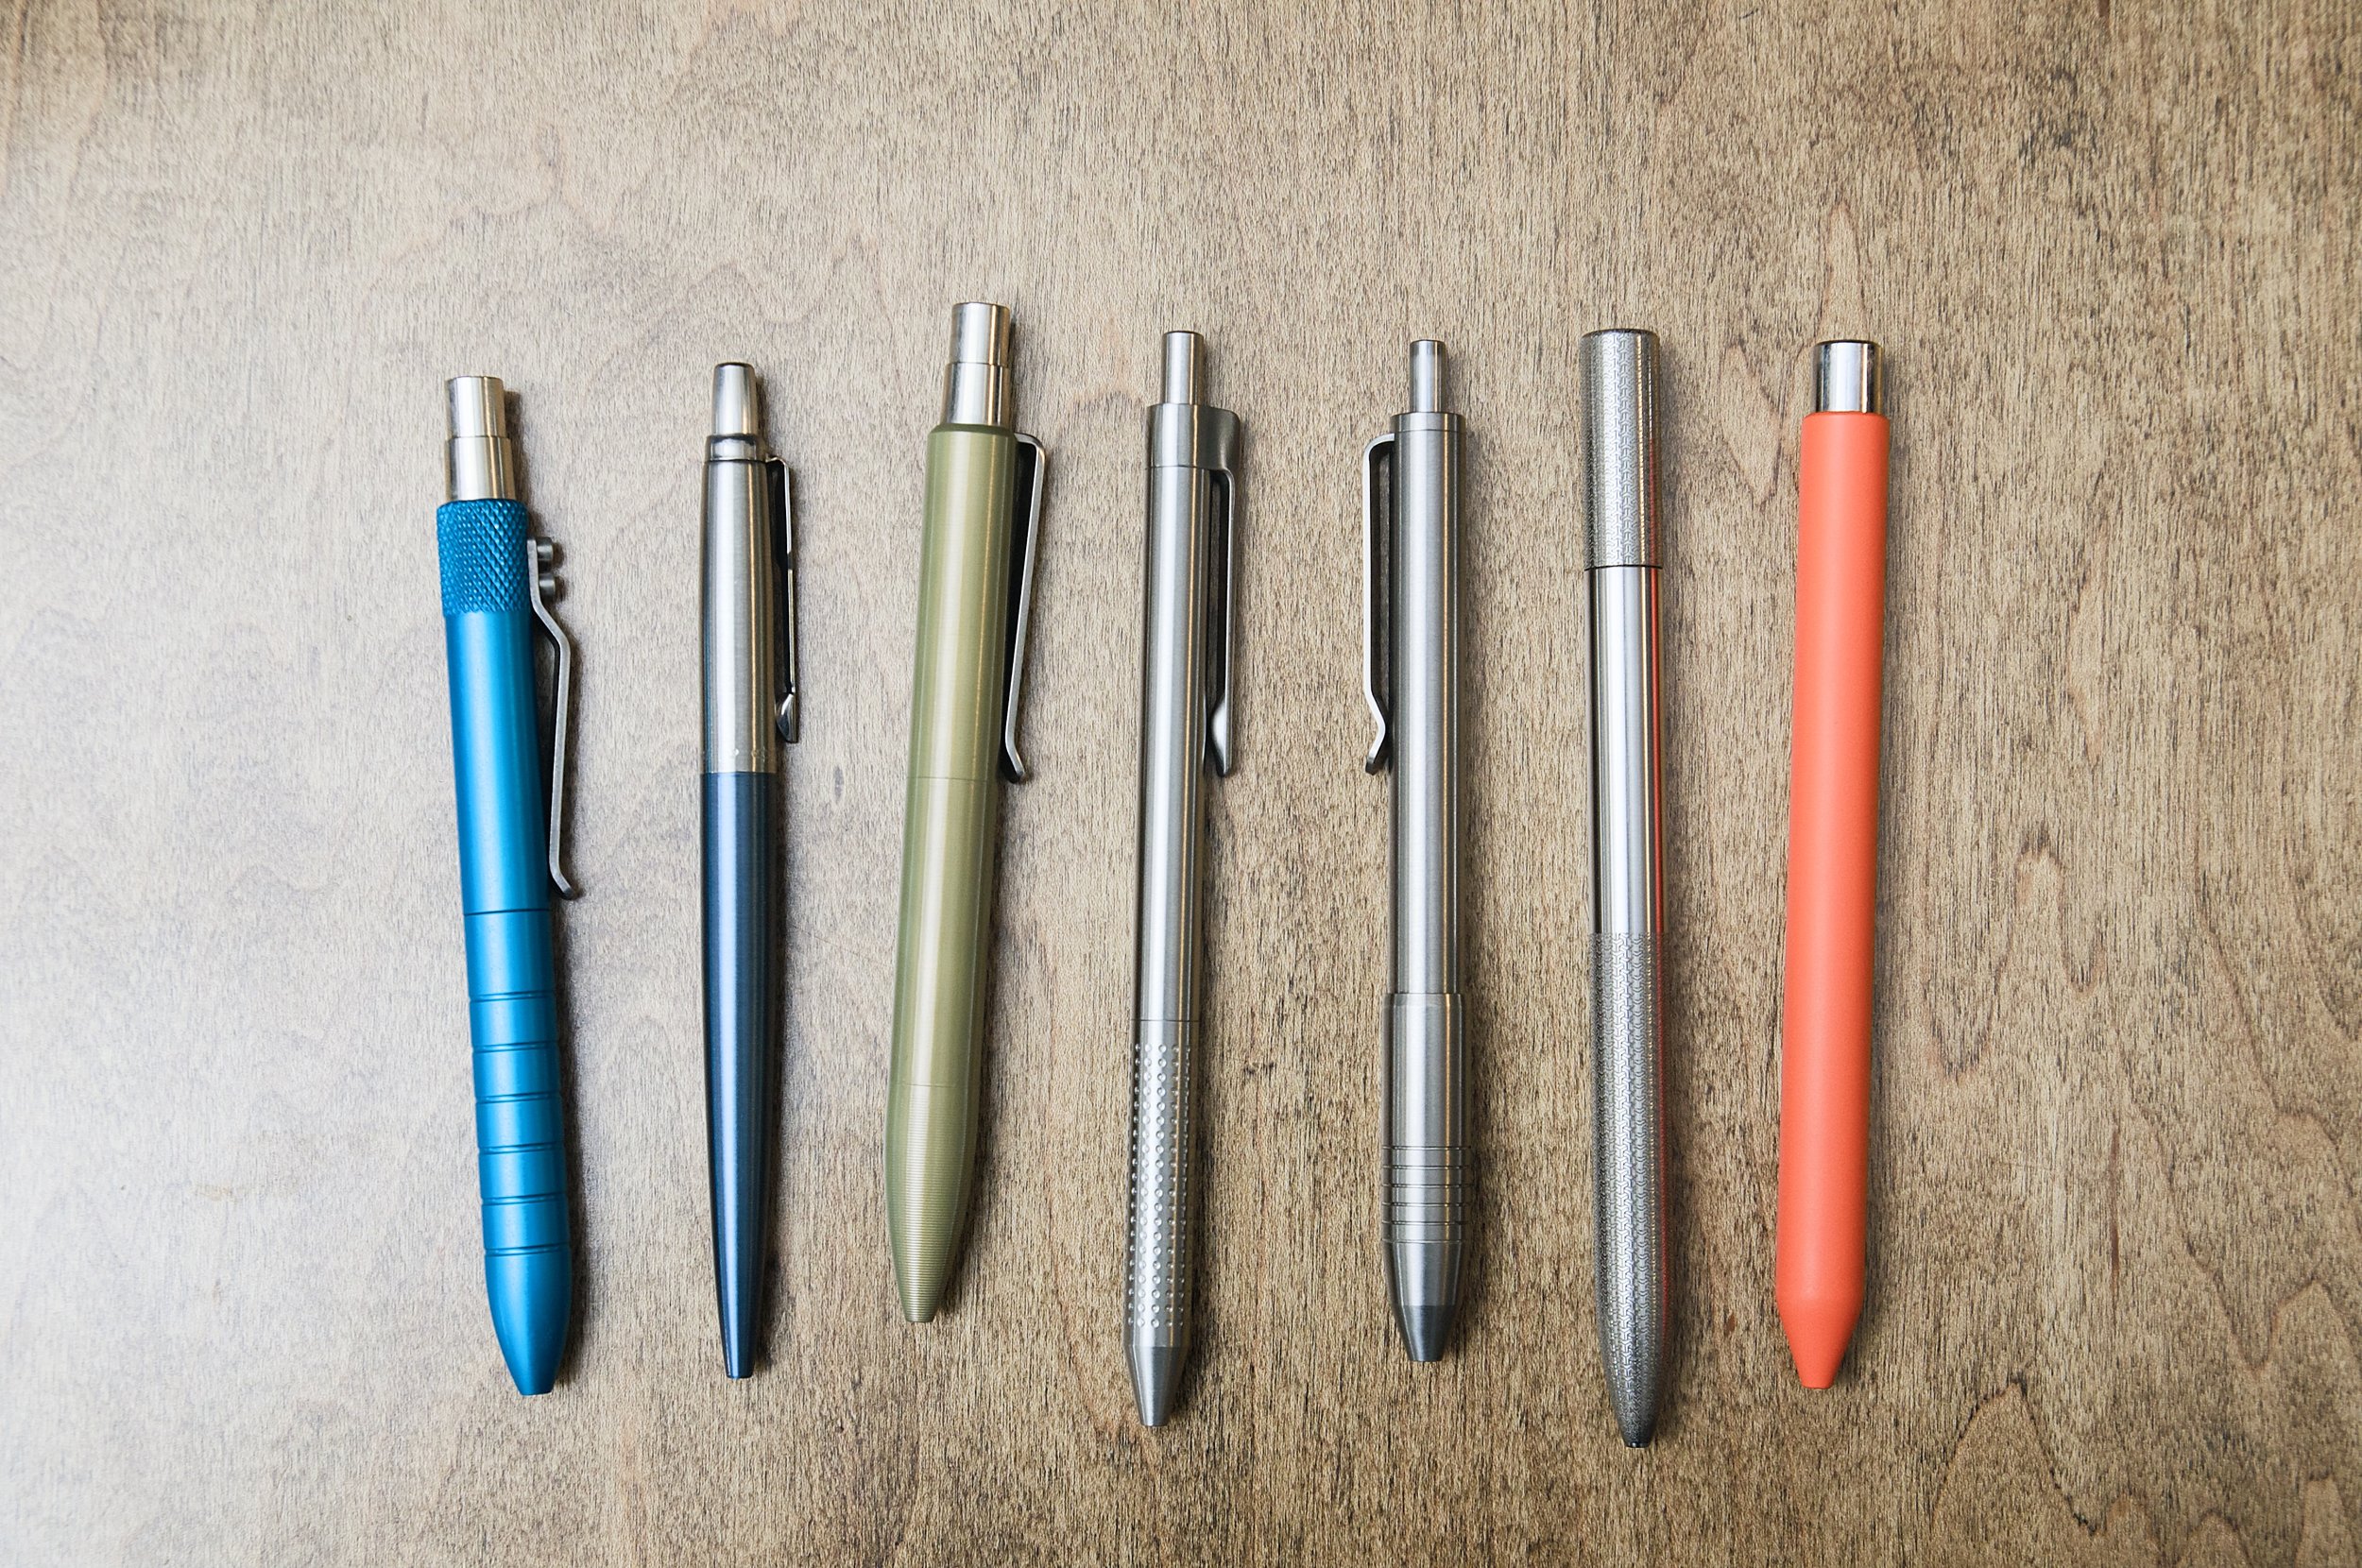 Bellroy Pencil Case Review — The Pen Addict